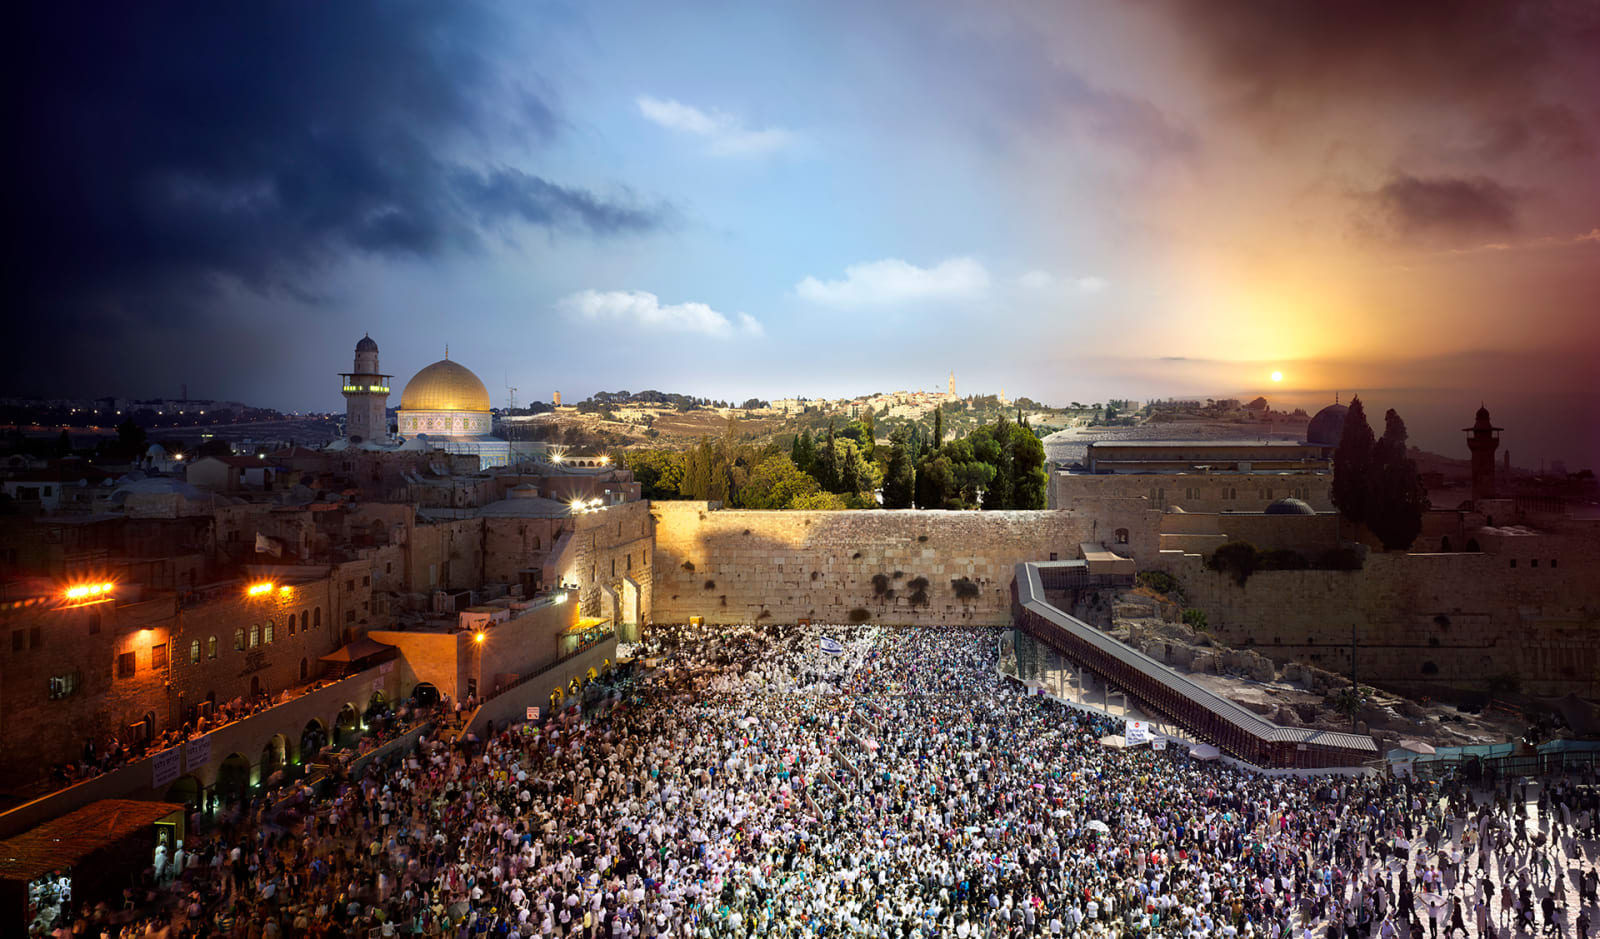 Stephen Wilkes, Western Wall, Jerusalem, Israel, Day to Night™, 2012